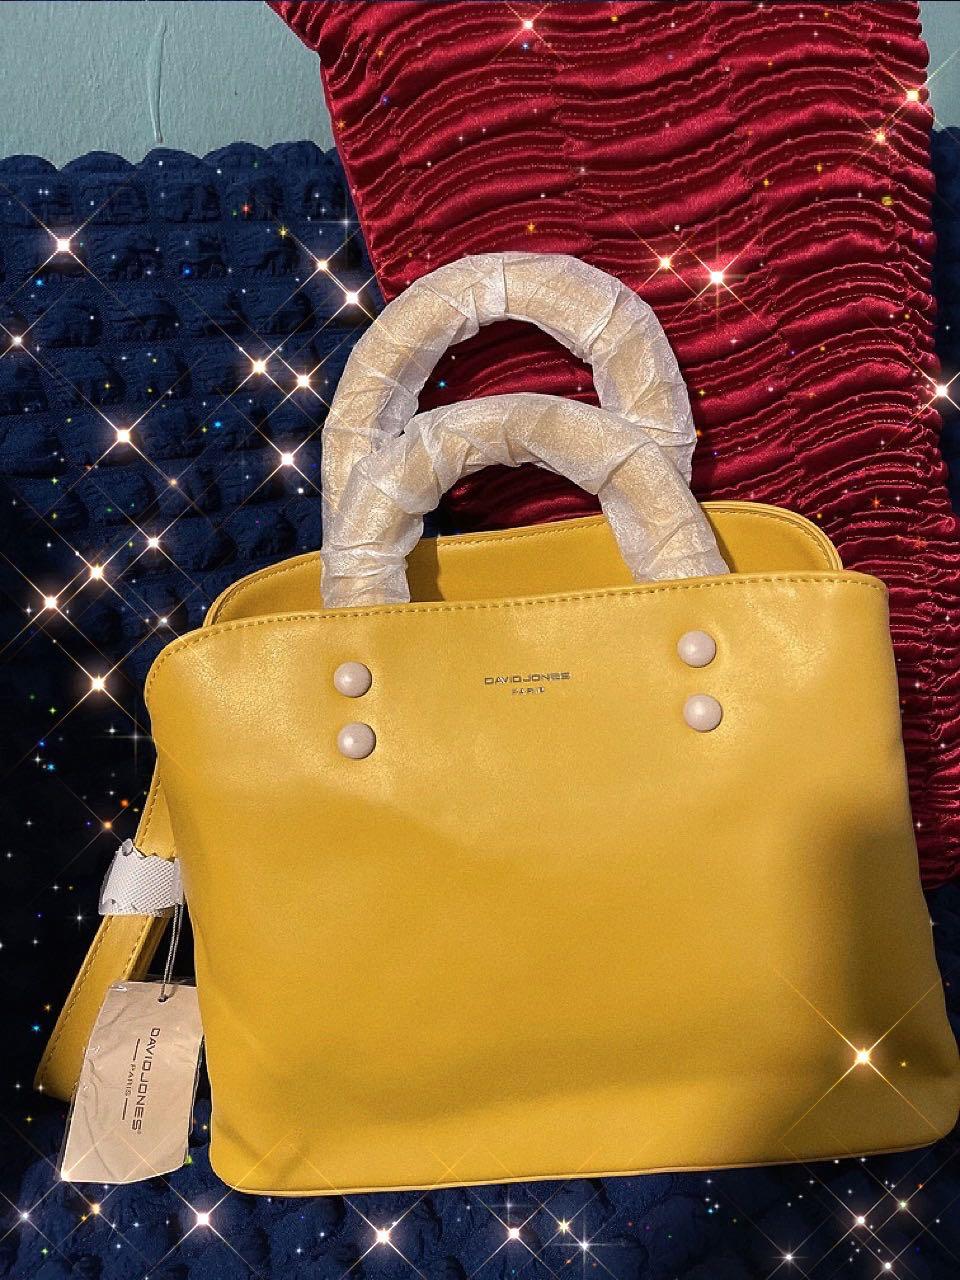 David Jones Paris Handbag, Luxury, Bags & Wallets on Carousell